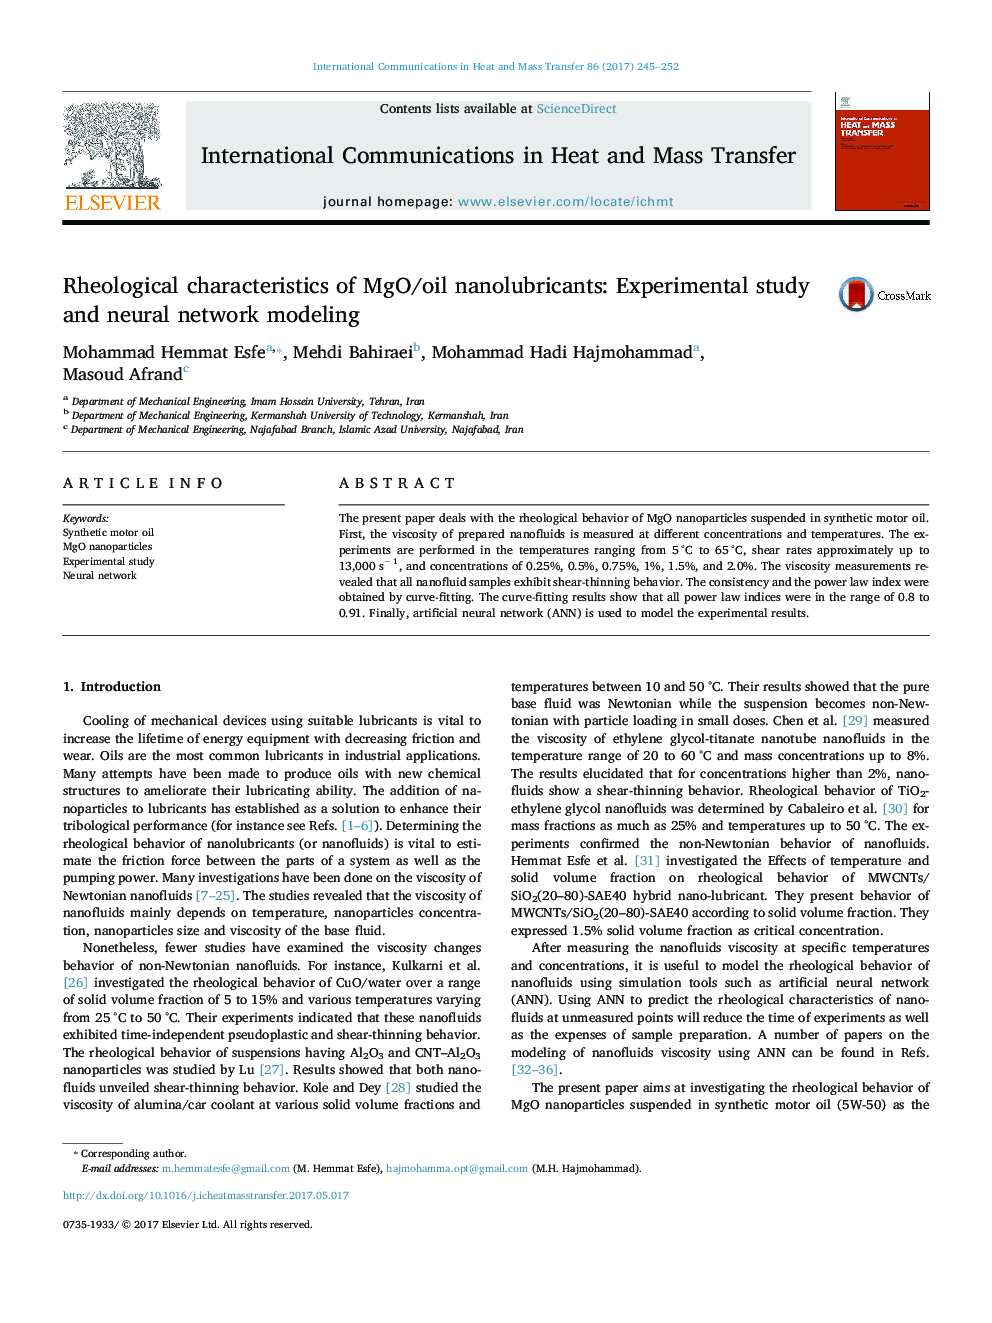 Rheological characteristics of MgO/oil nanolubricants: Experimental study and neural network modeling